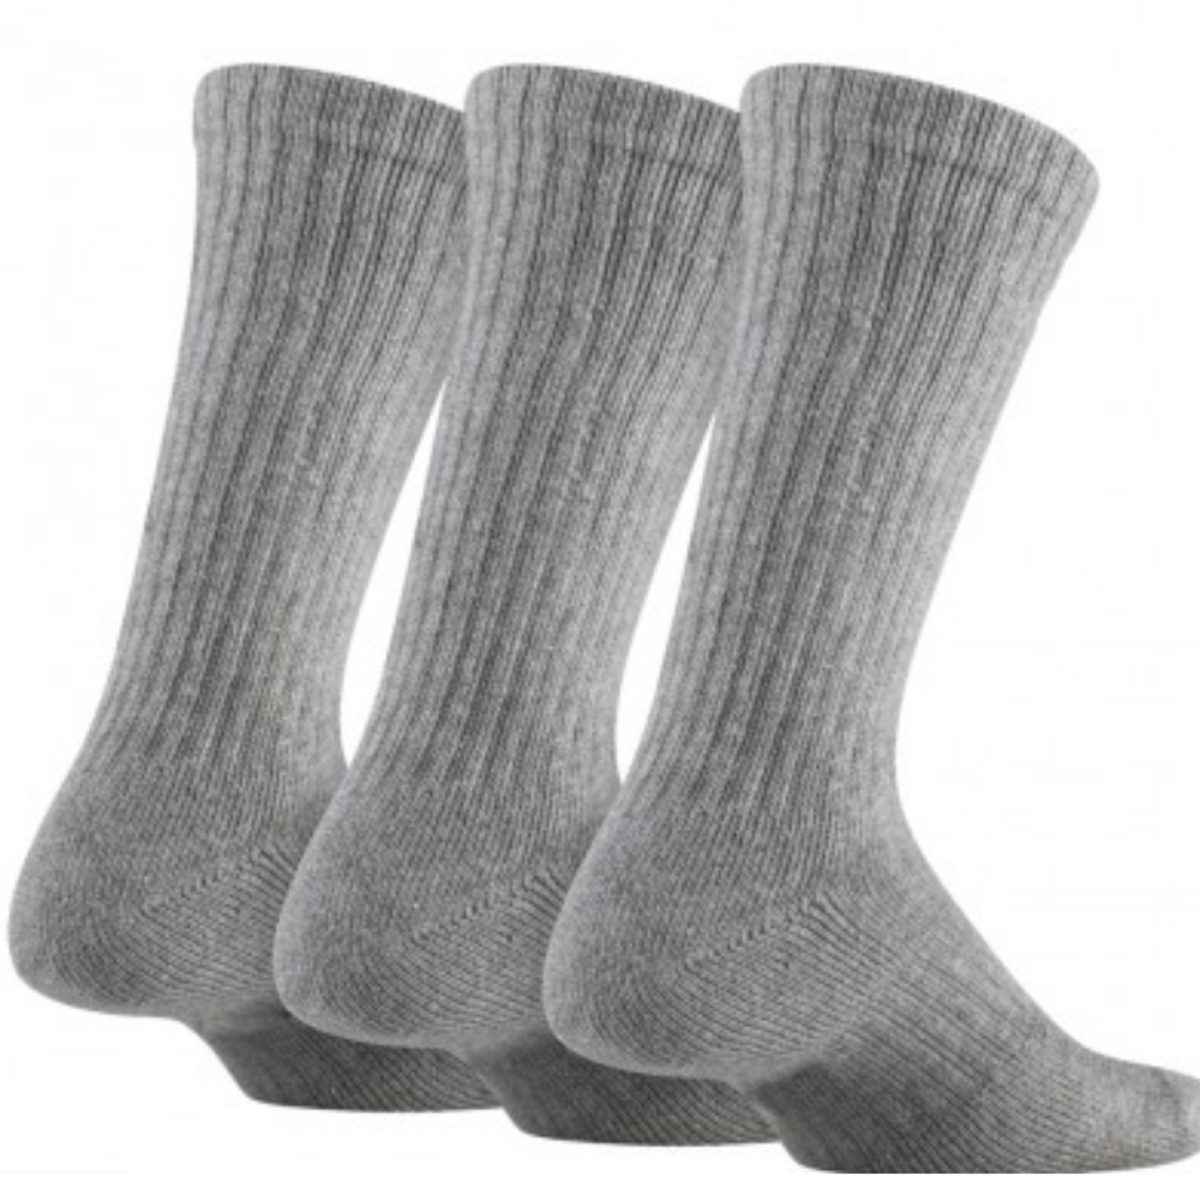 Calcetas largas deportivas algodón (12 pares) – racotex